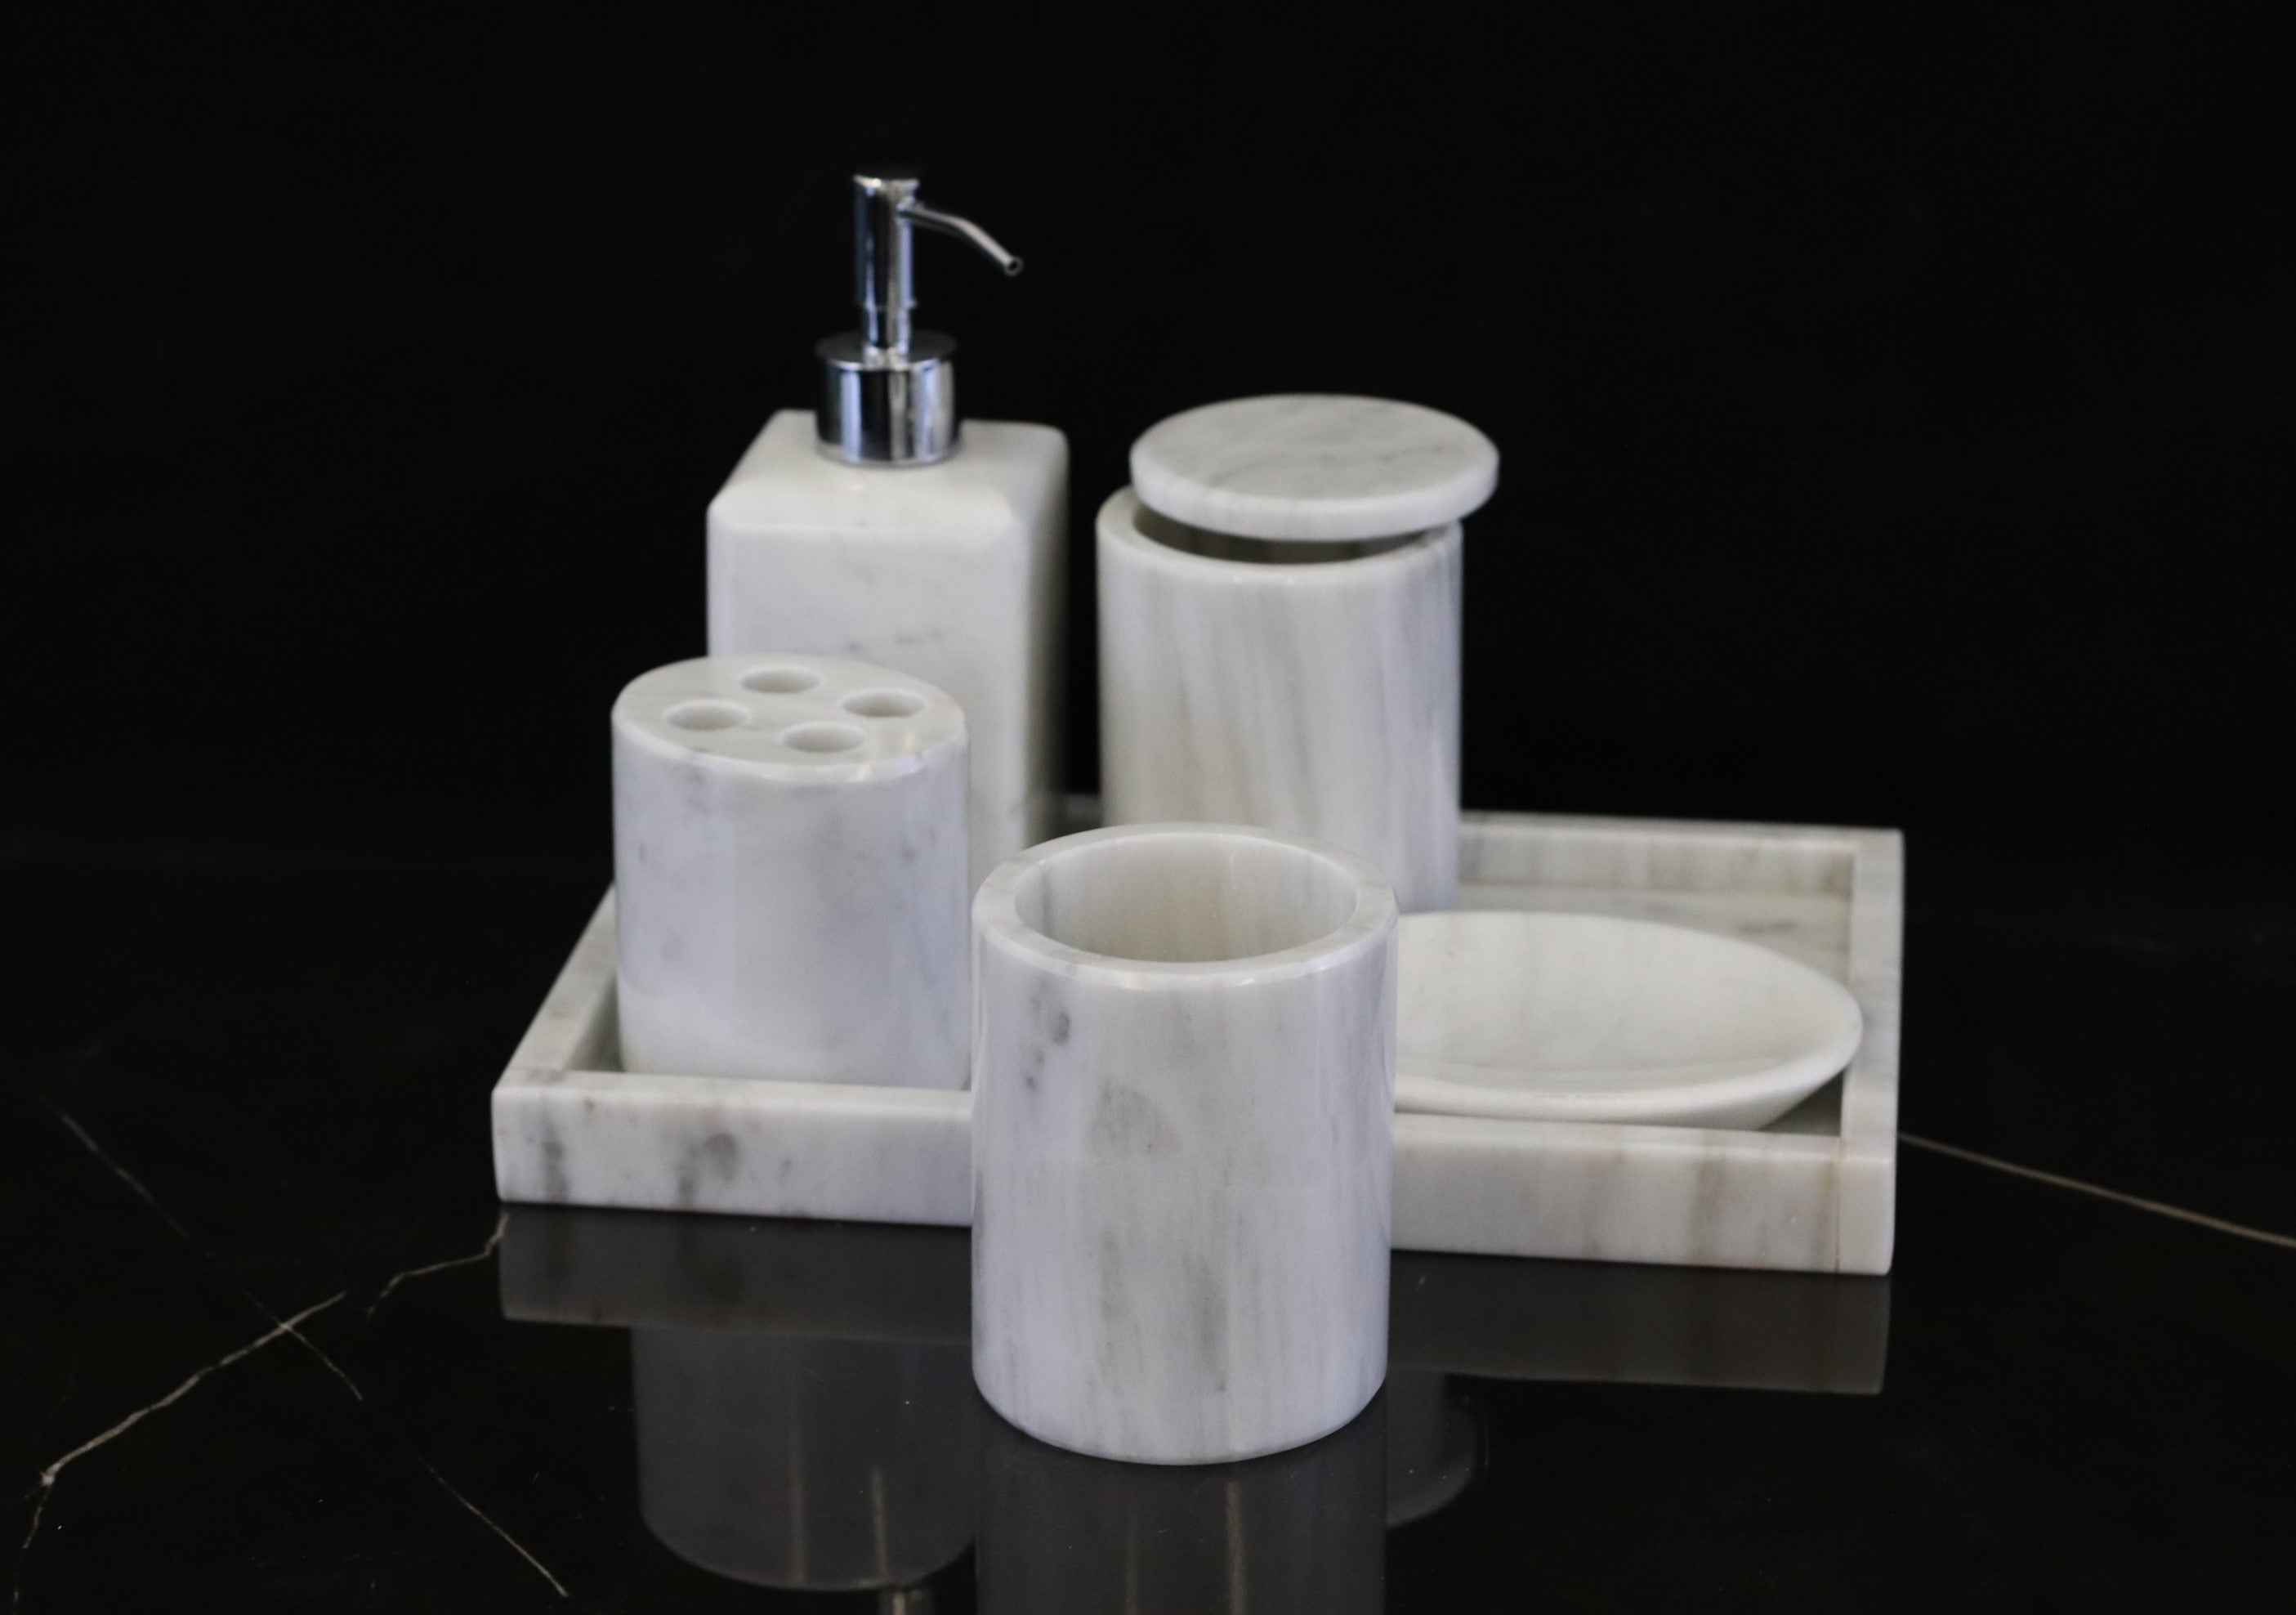 Carrara Marble Bathroom Accessory Set